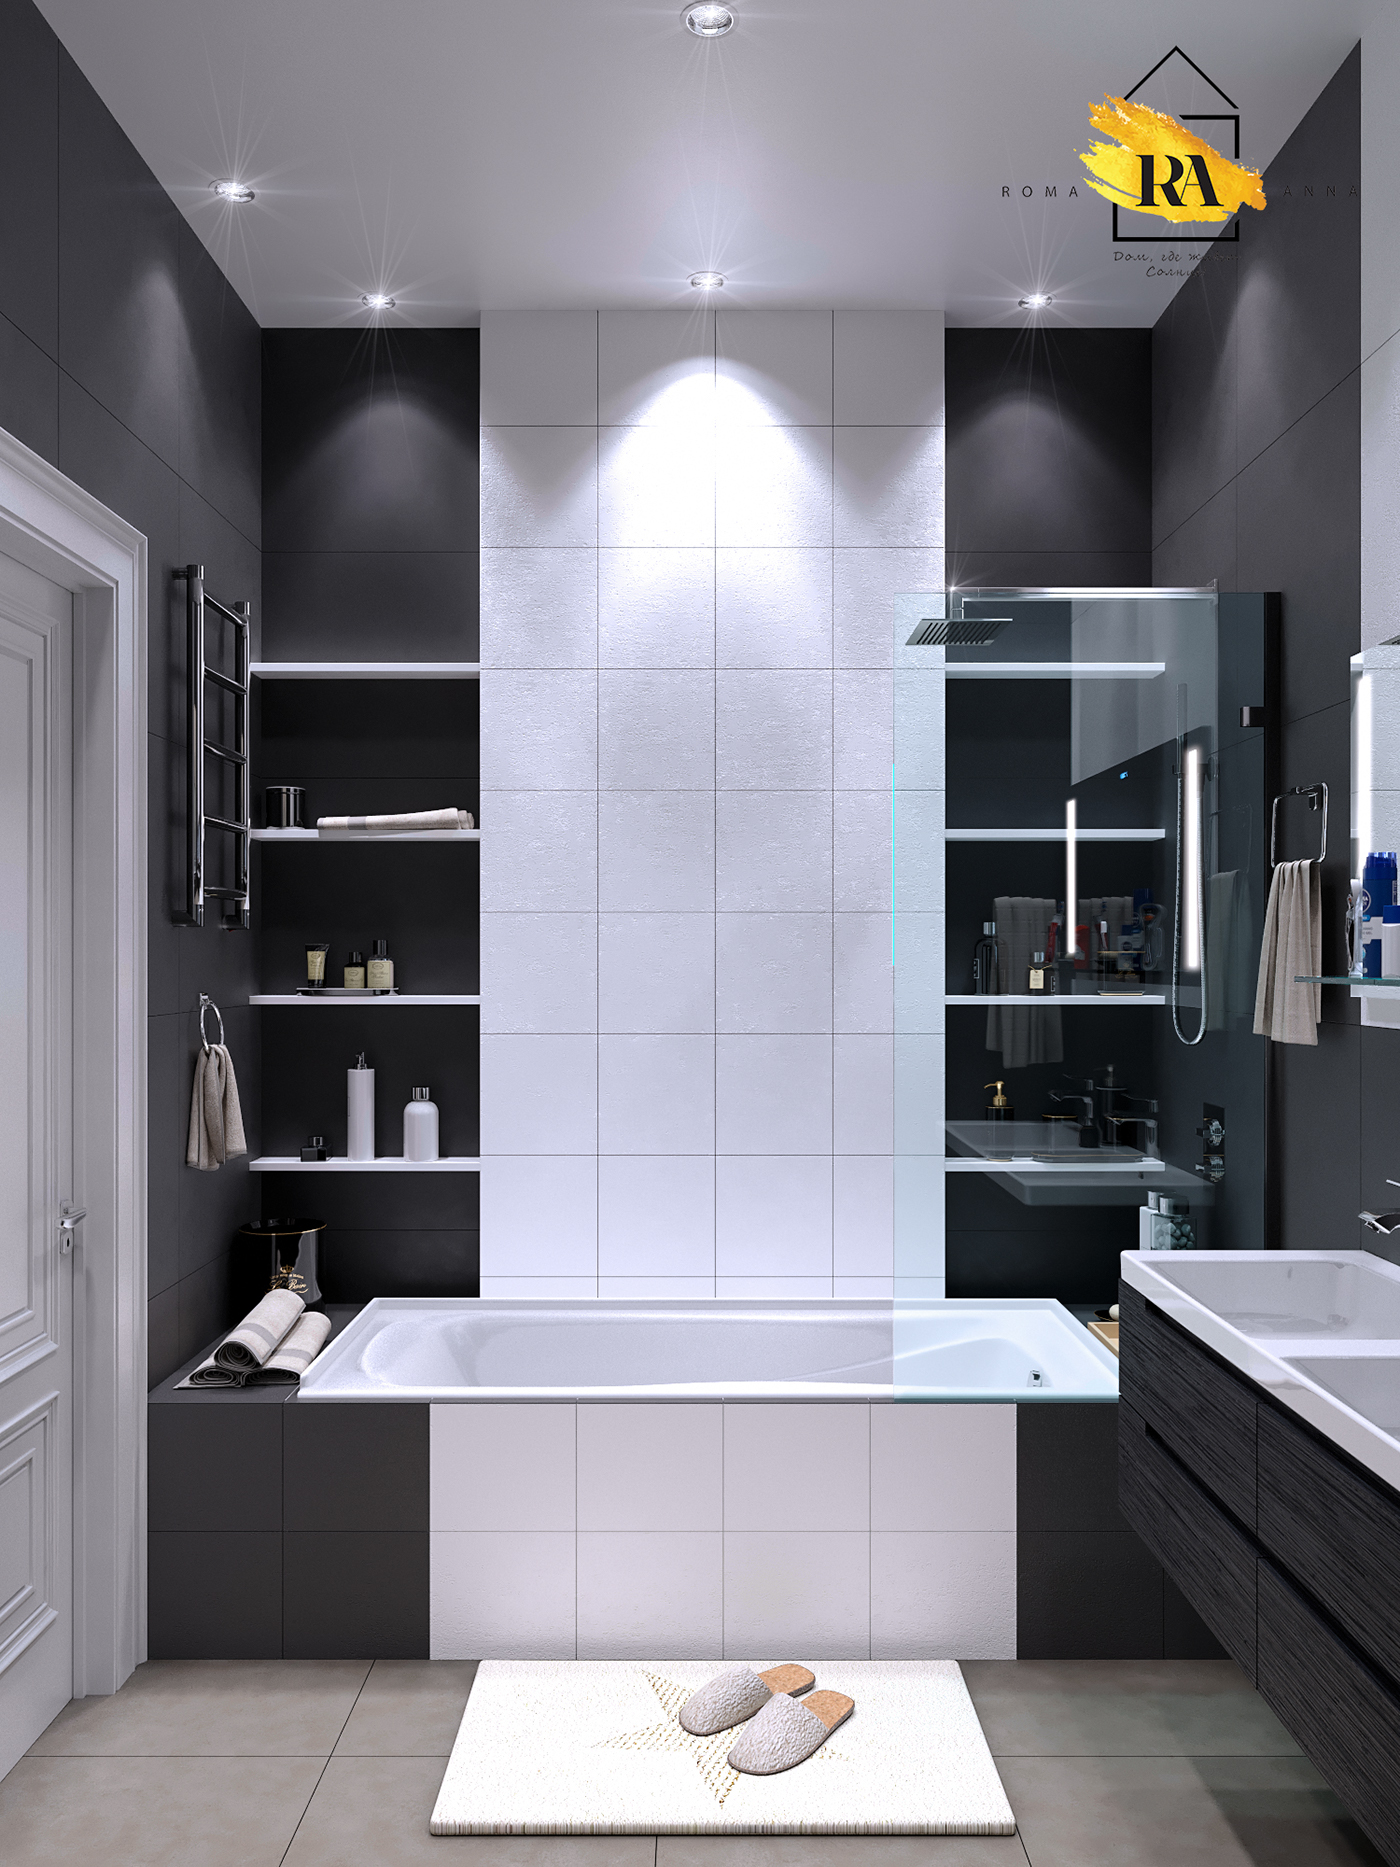 Visualisation de salle de bain dans 3d max corona render image